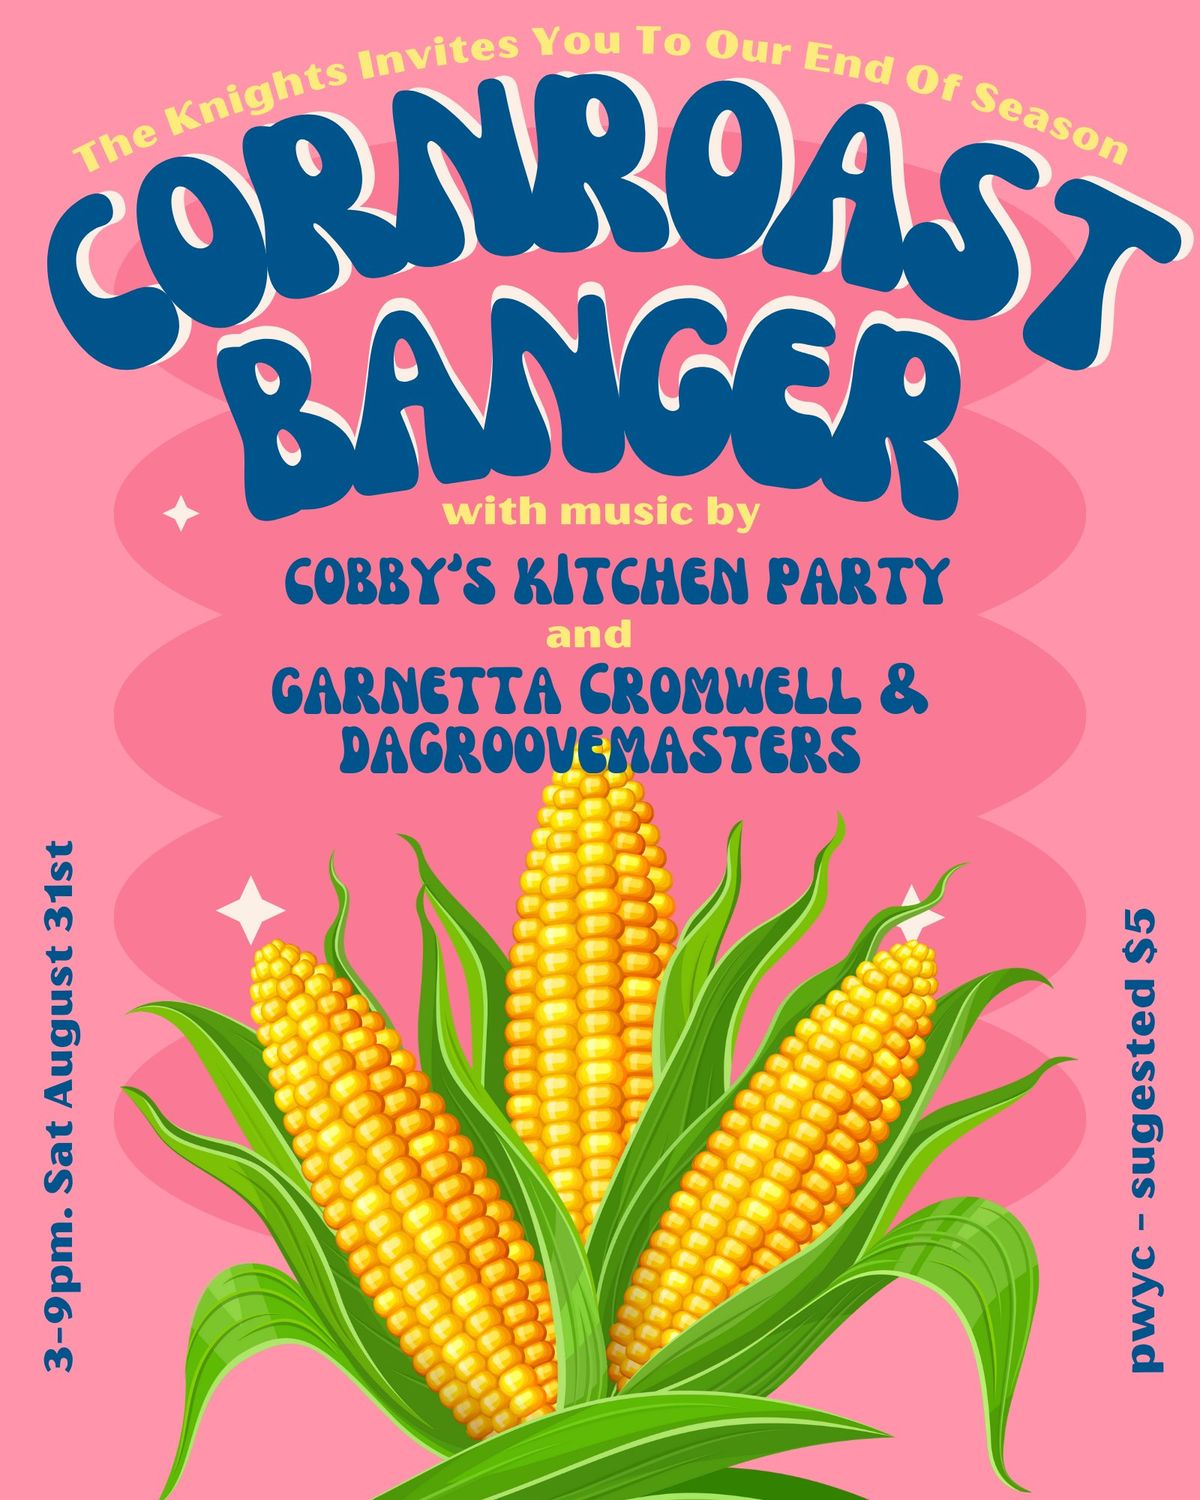 End of Season Cornroast with Cobby's Kitchen Party - Garnetta Cromwell & DaGroovemasters